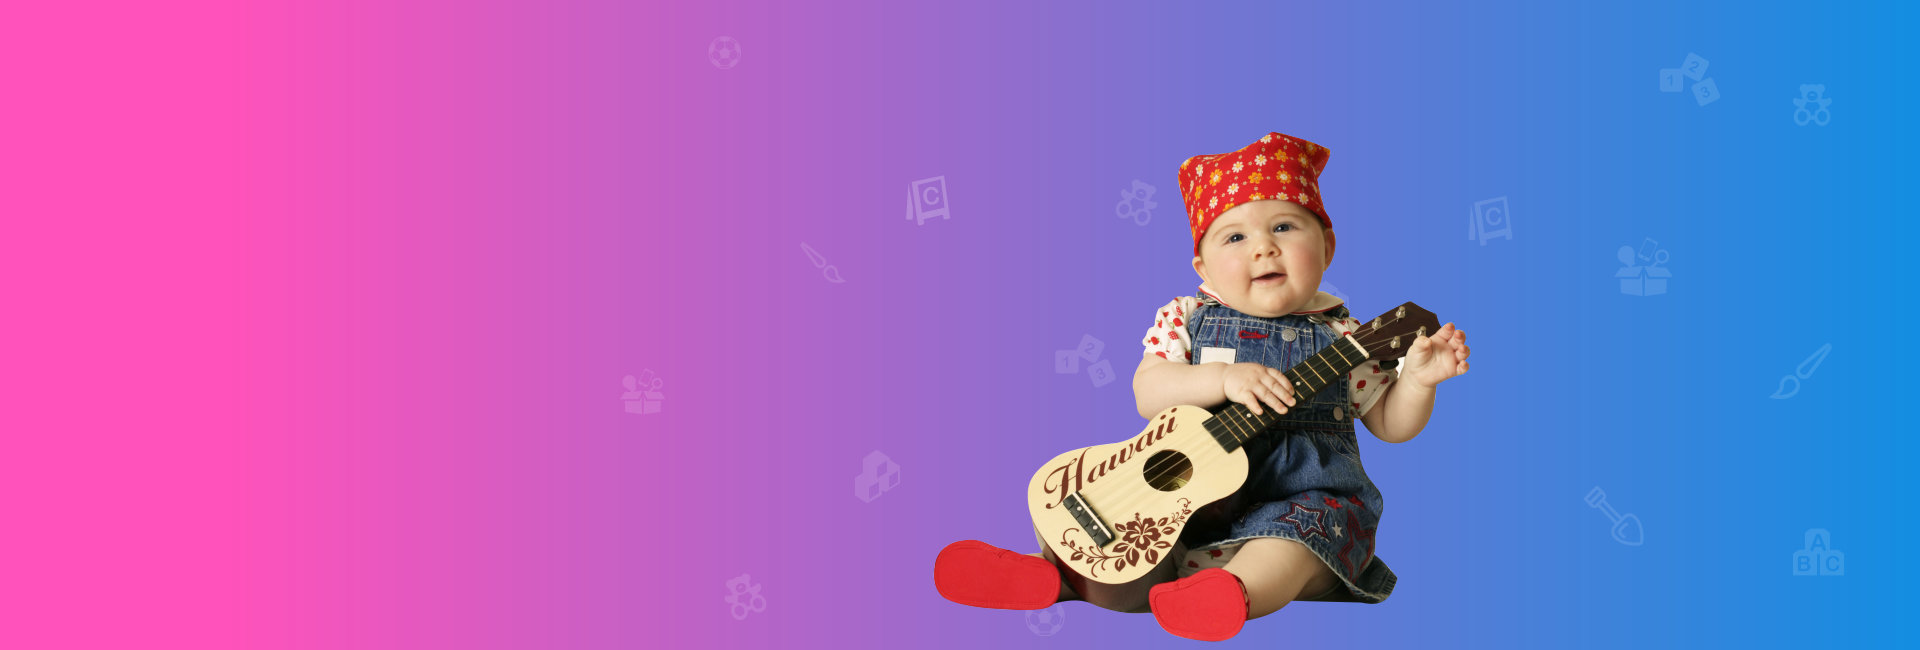 infant holding a guitar